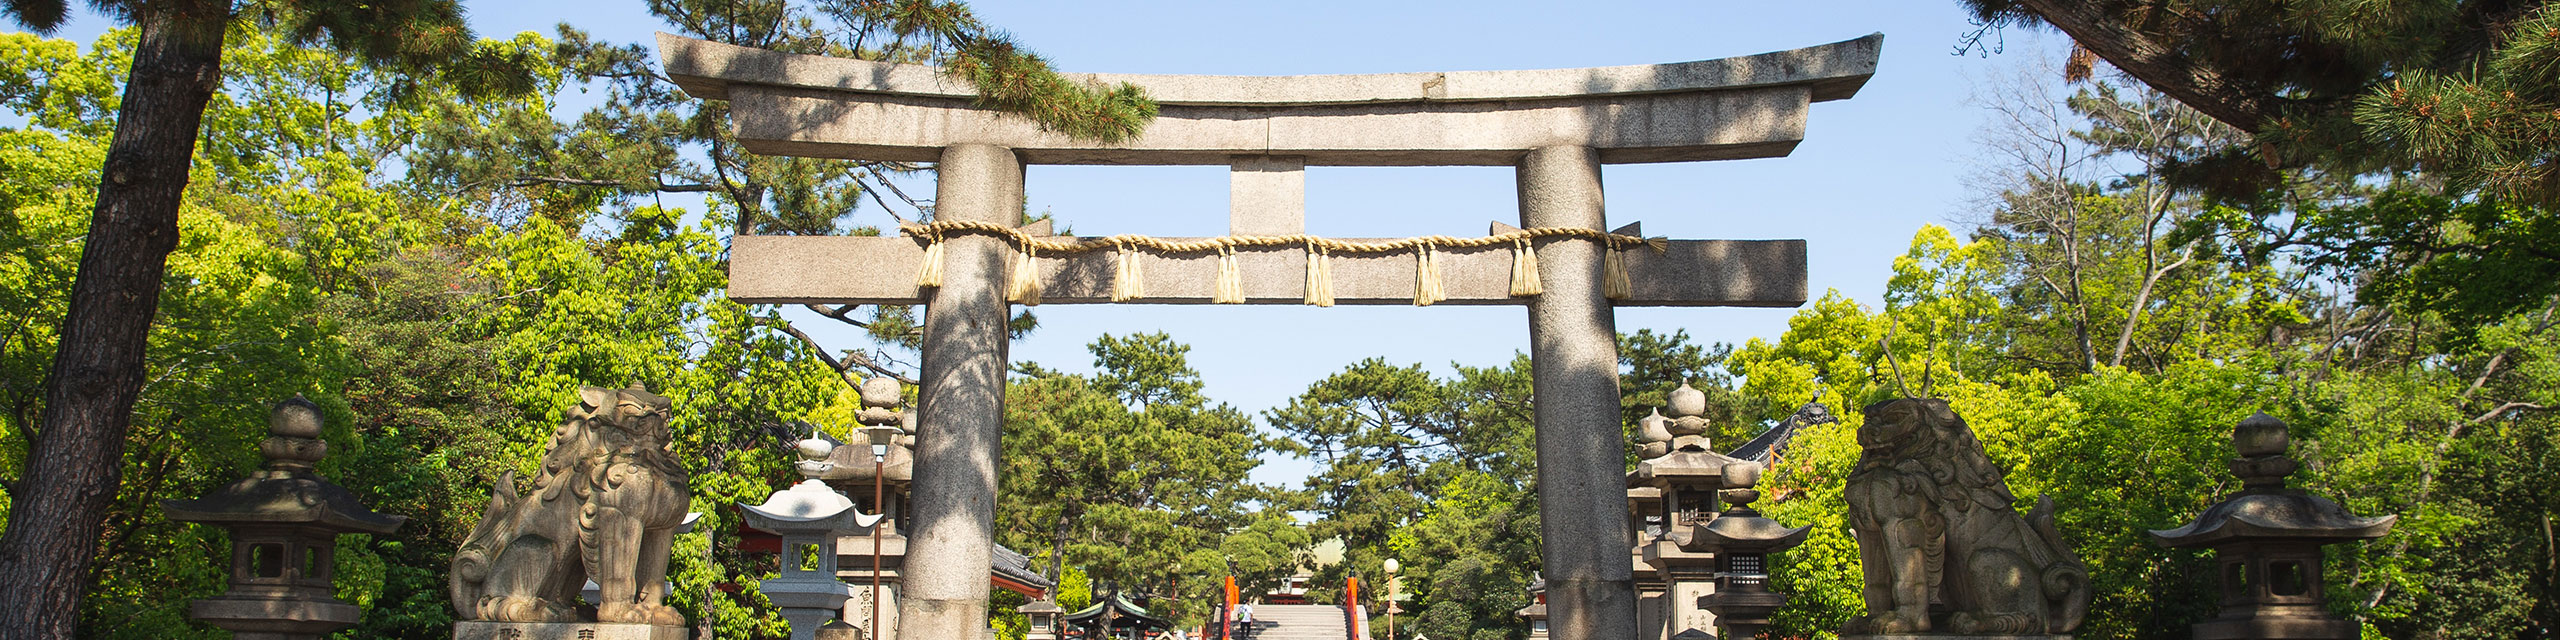 Japanese temple gate.